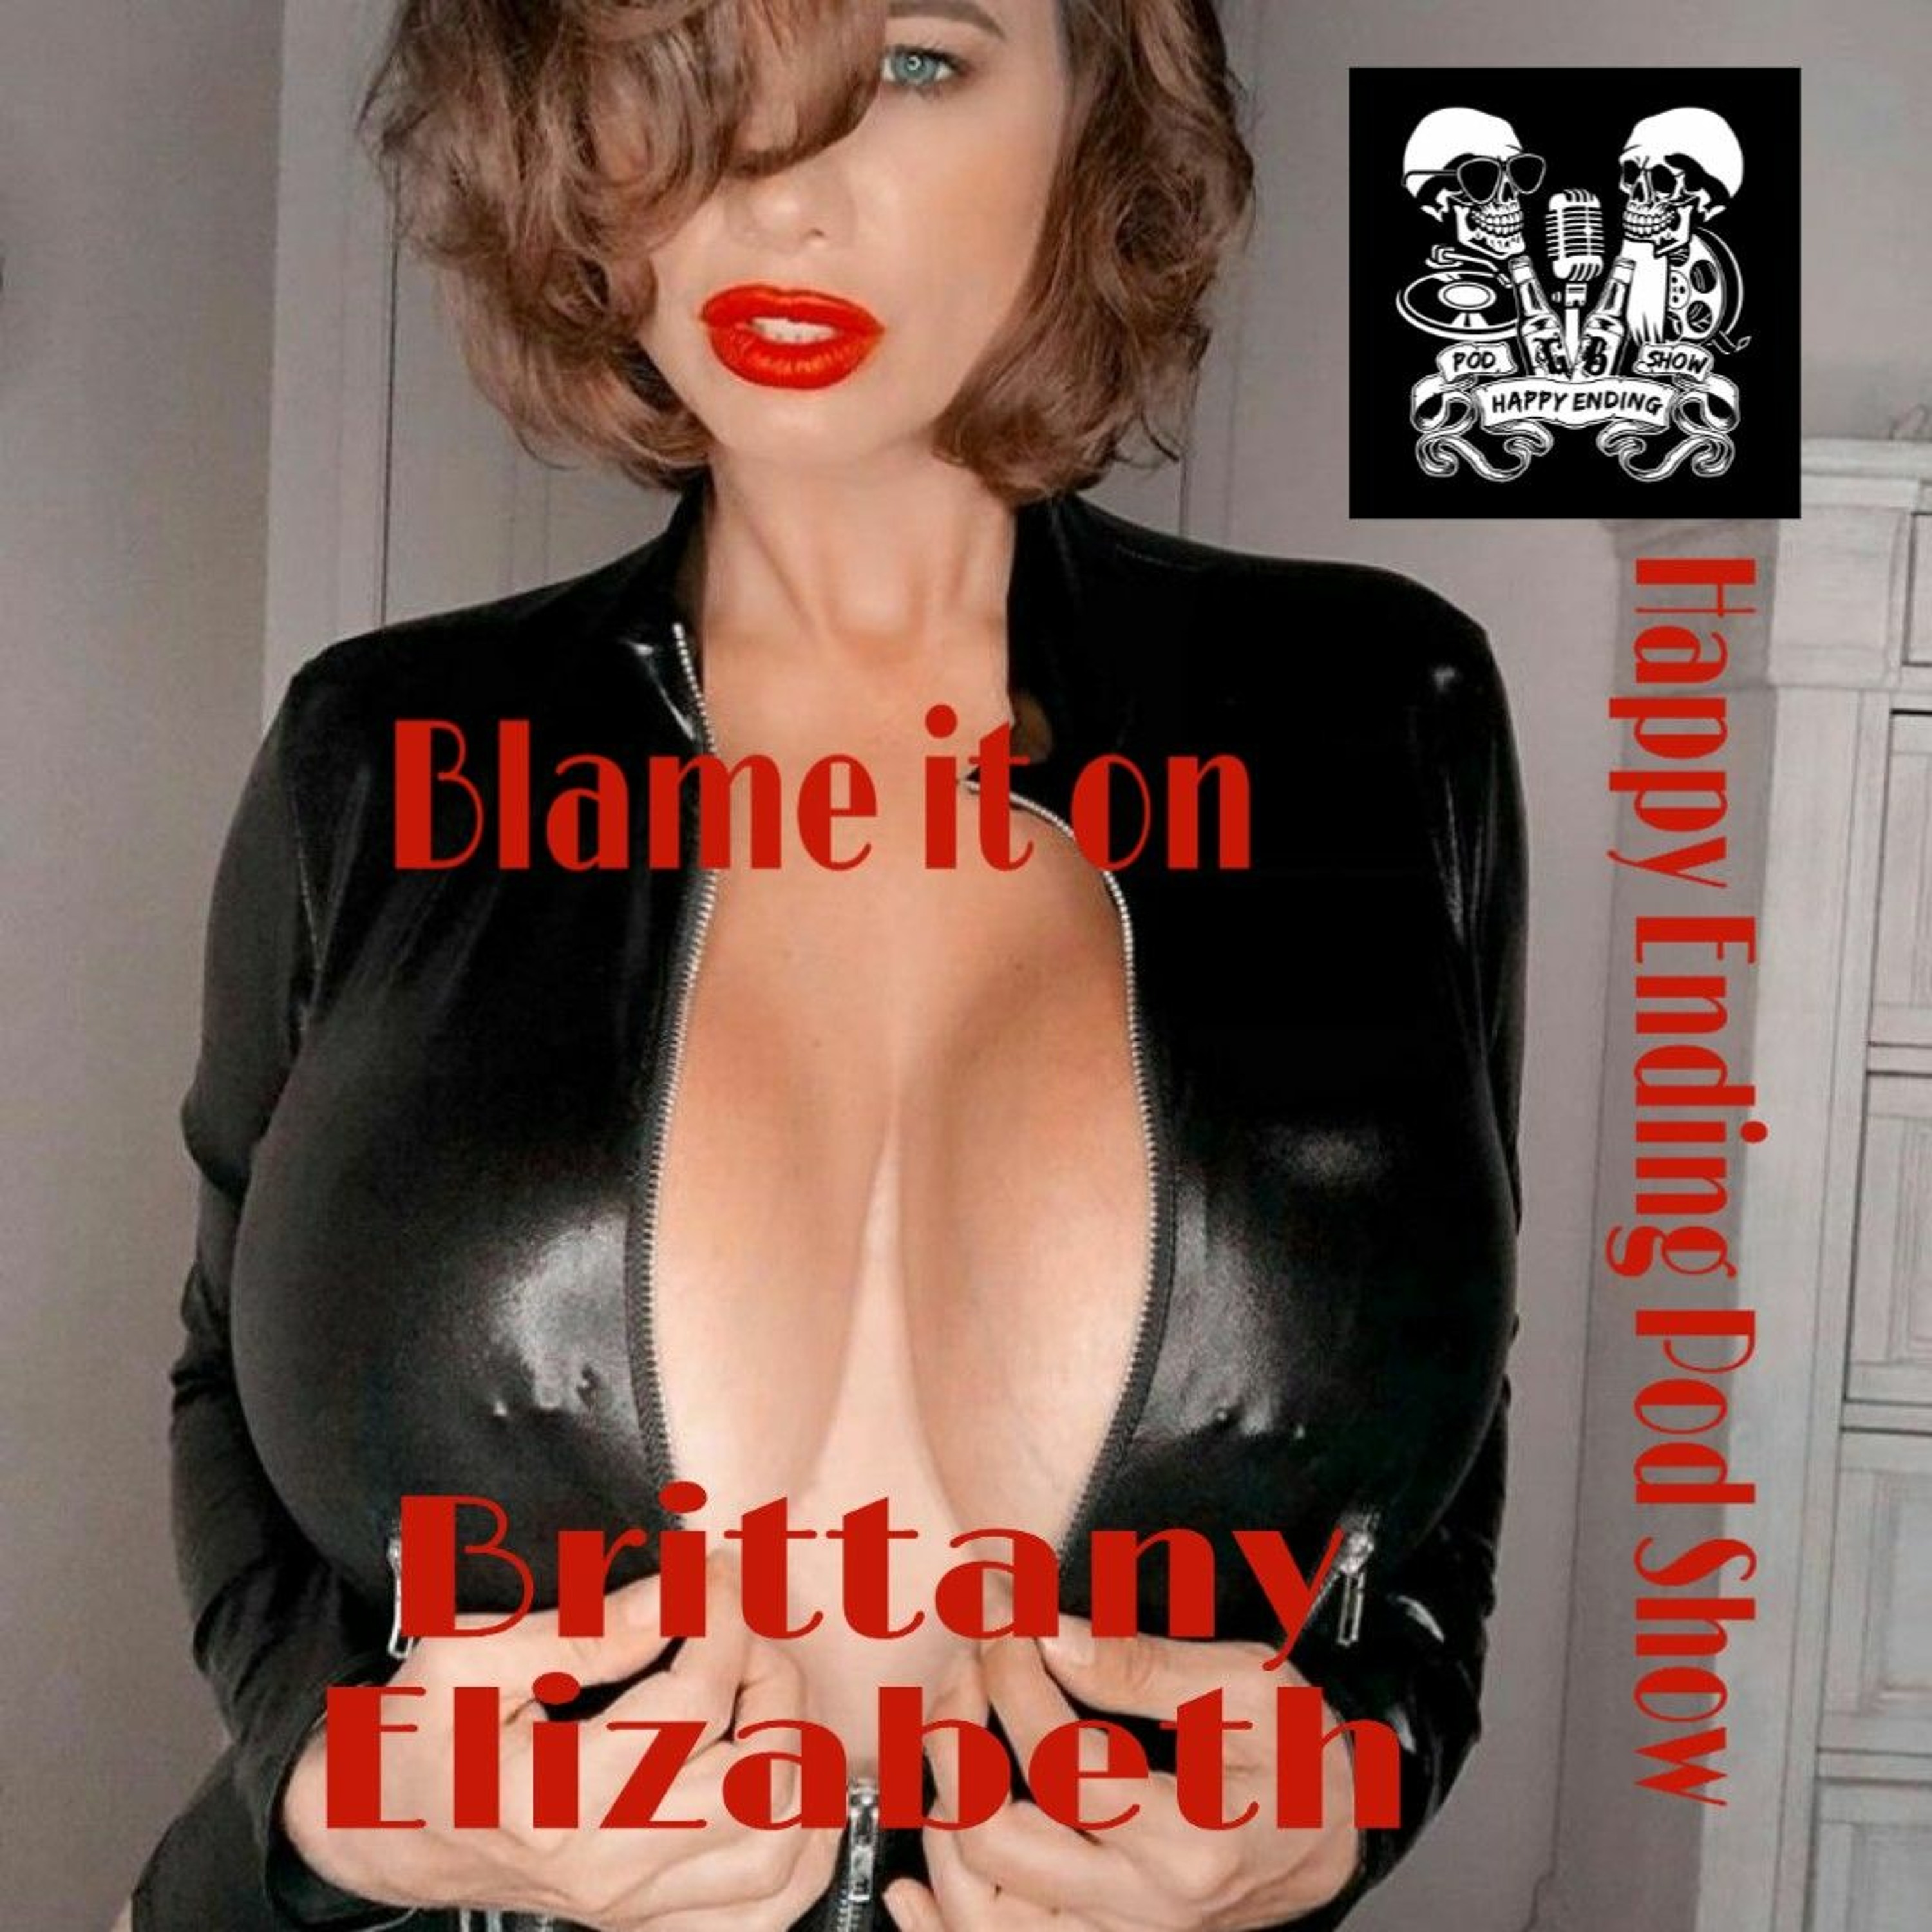 Who is brittany elizabeth